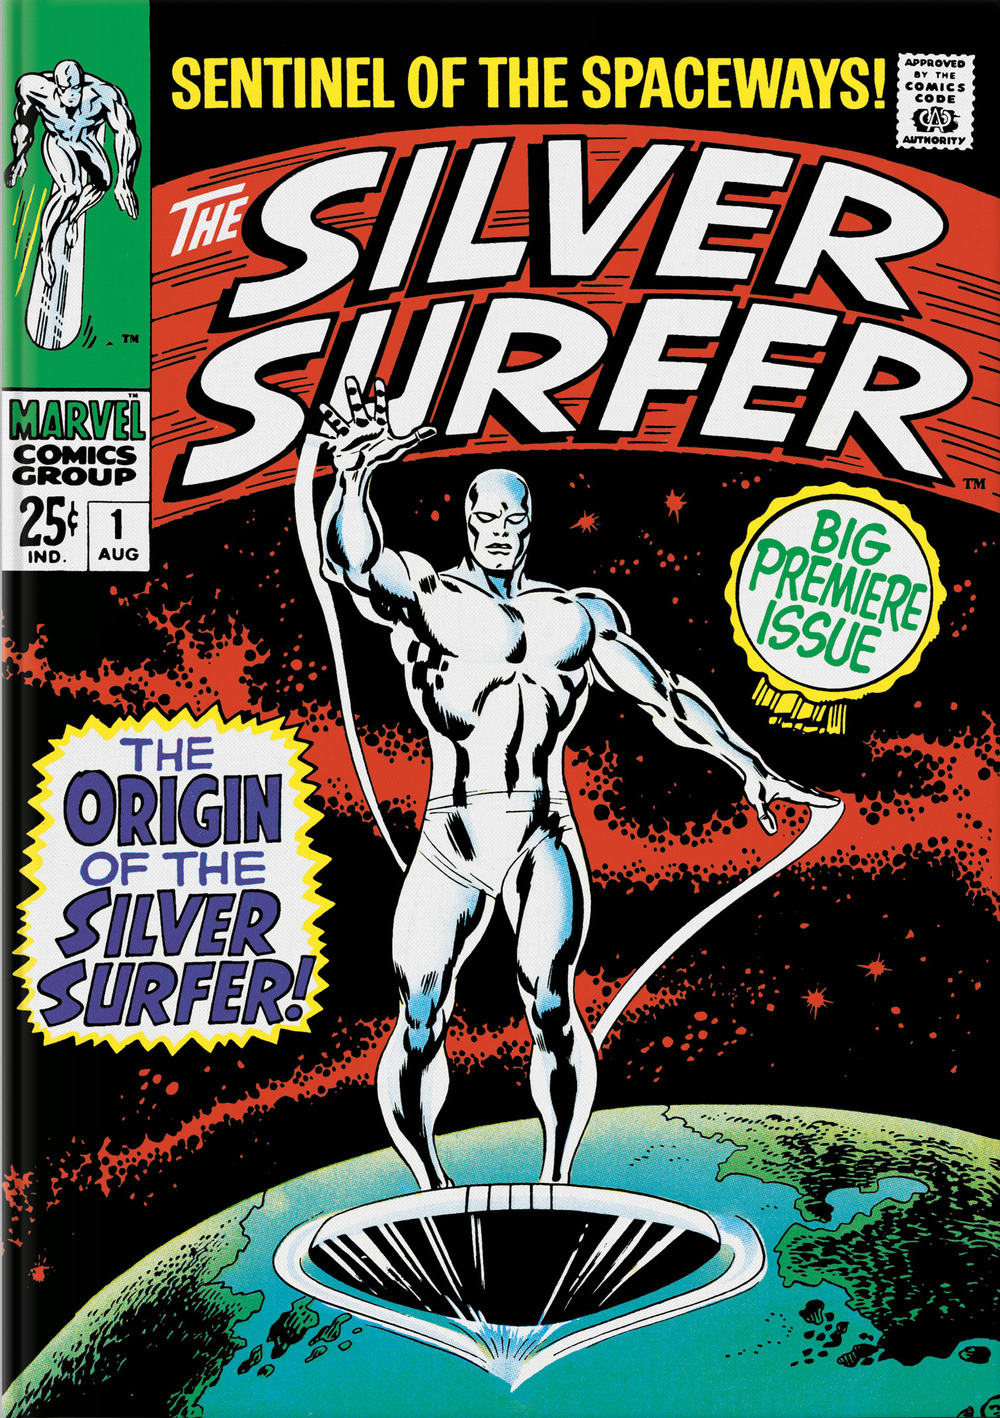 Marvel Comics Library. Silver Surfer. Vol. 1: 1968-1970